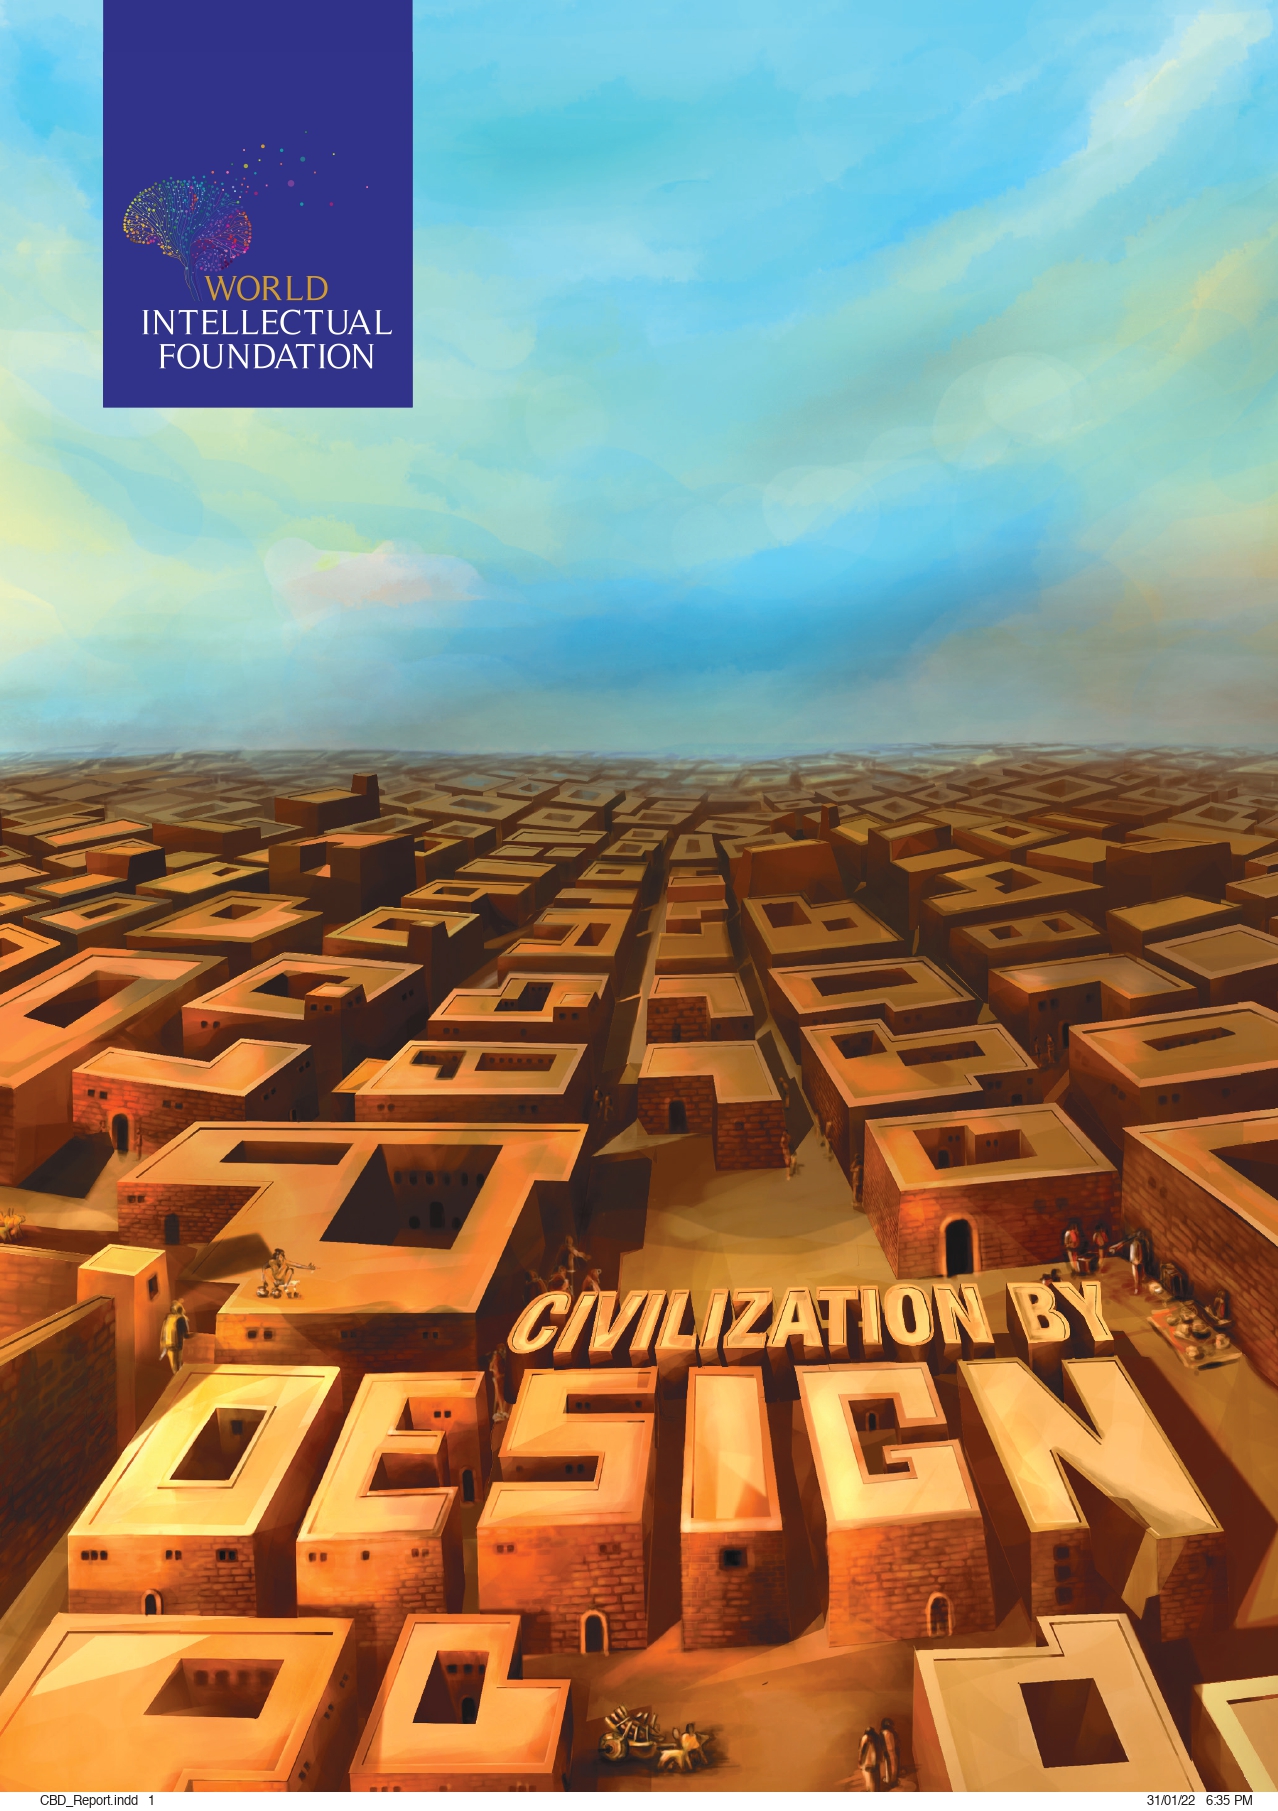 Civilization By Design